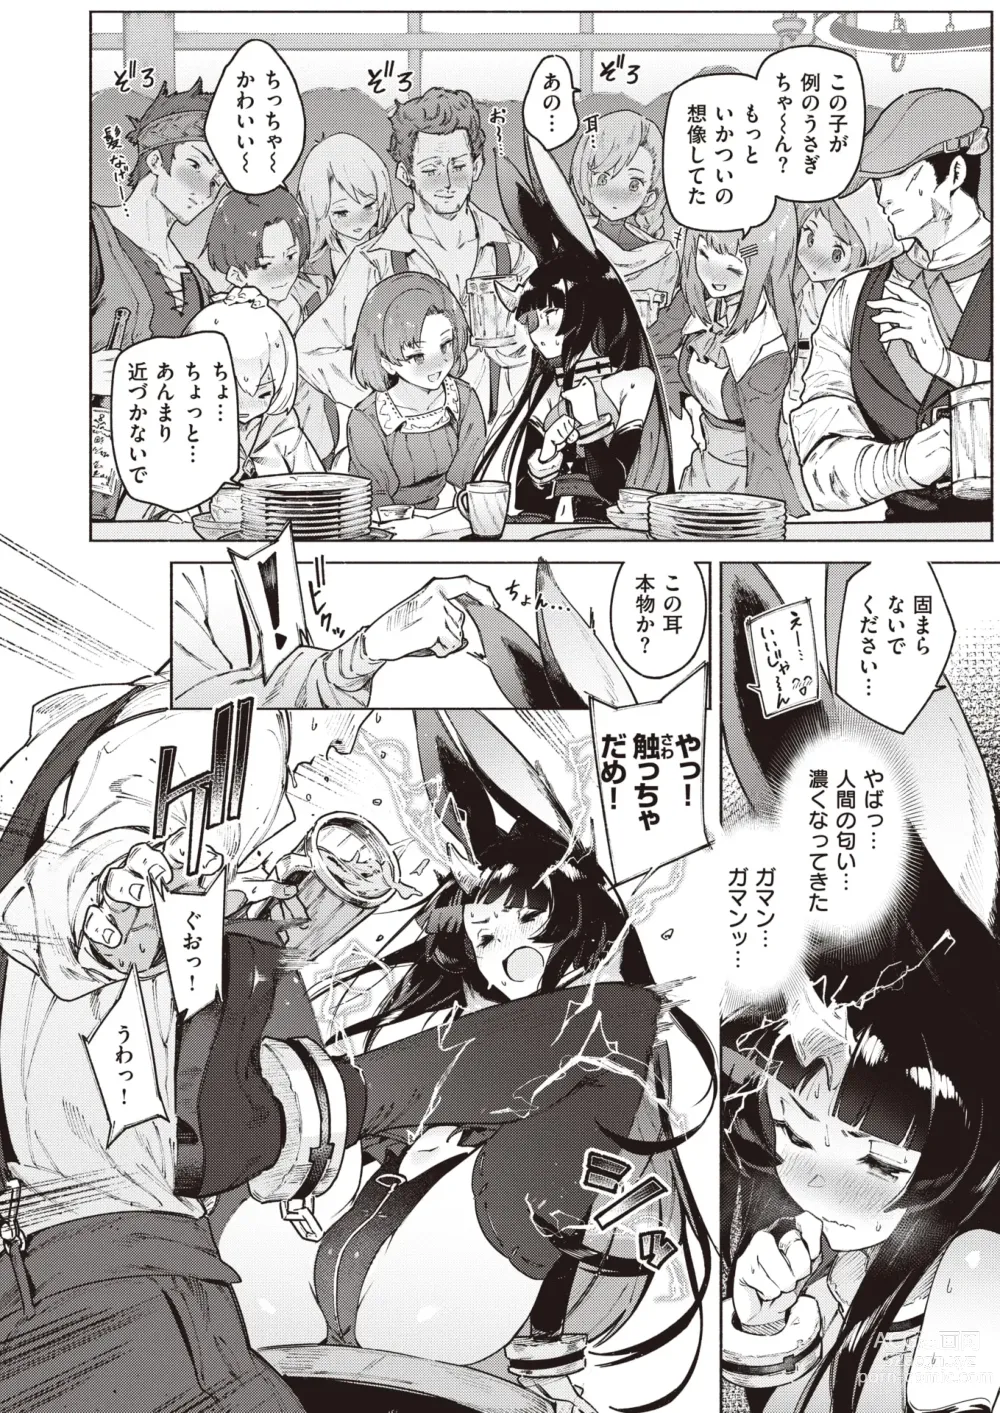 Page 7 of manga Isekai Rakuten Vol. 29